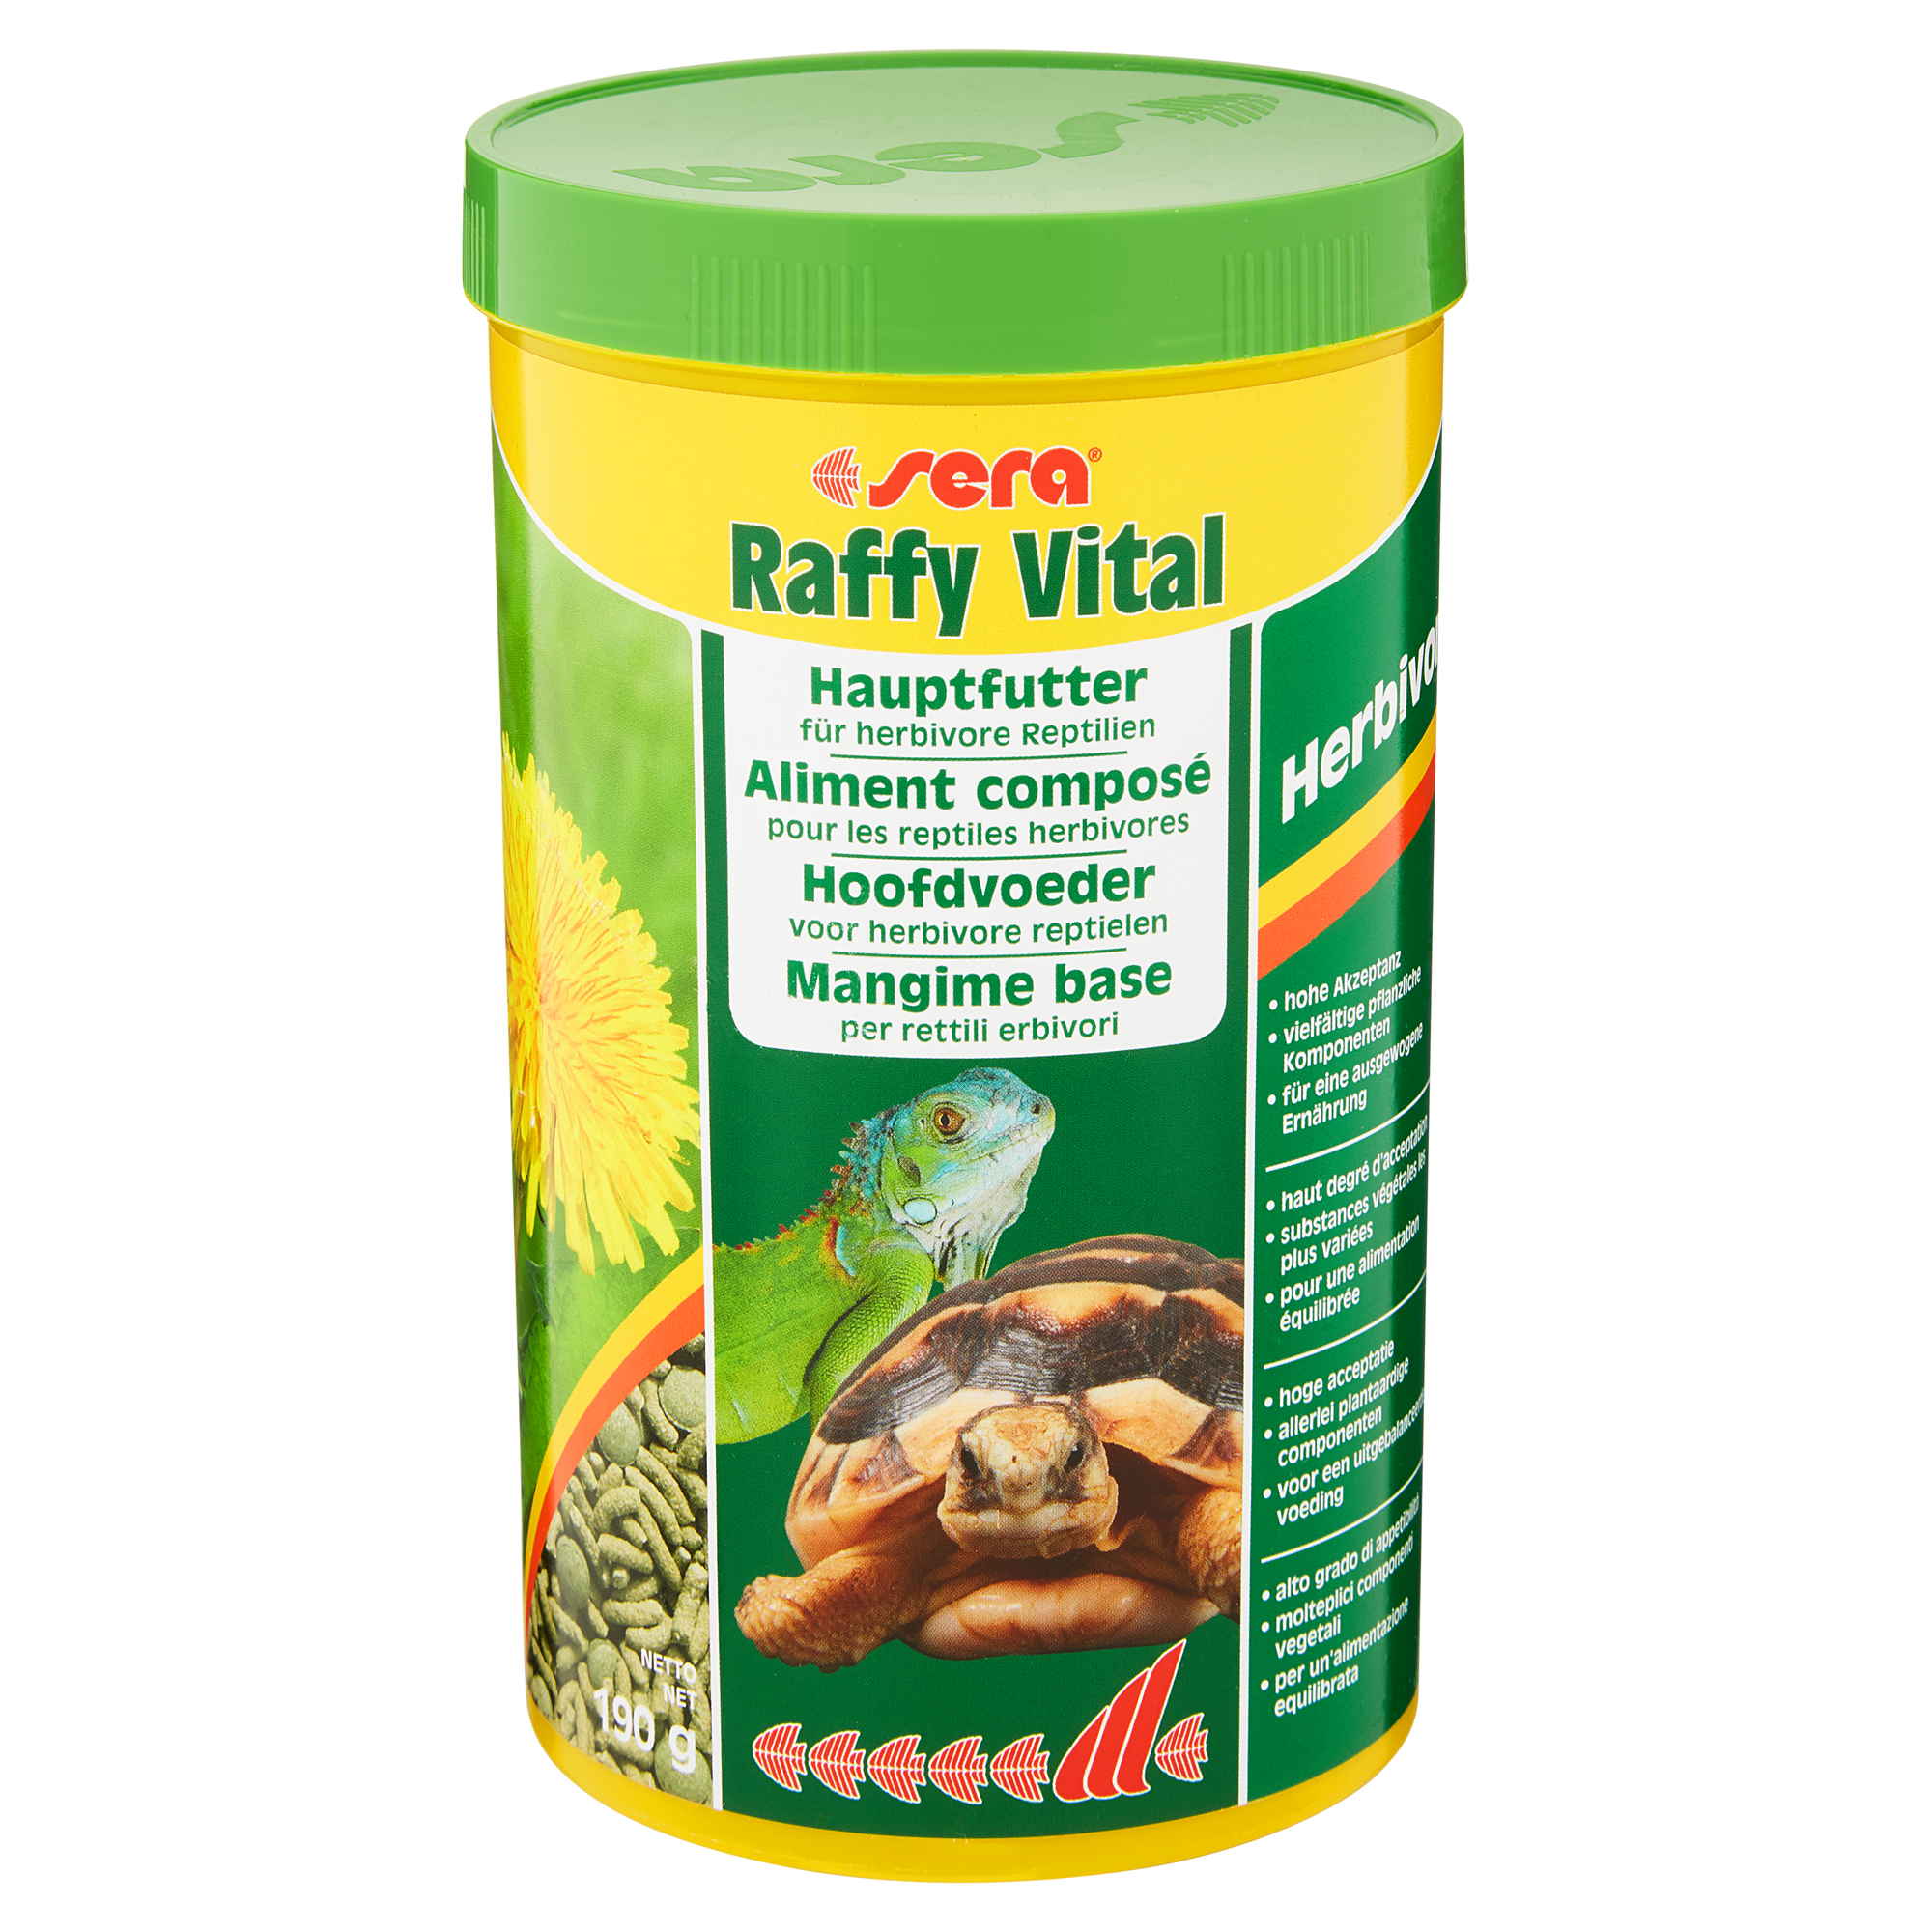 Reptilienfutter "Raffy Vital" Hauptfutter Herbivor 190 g + product picture